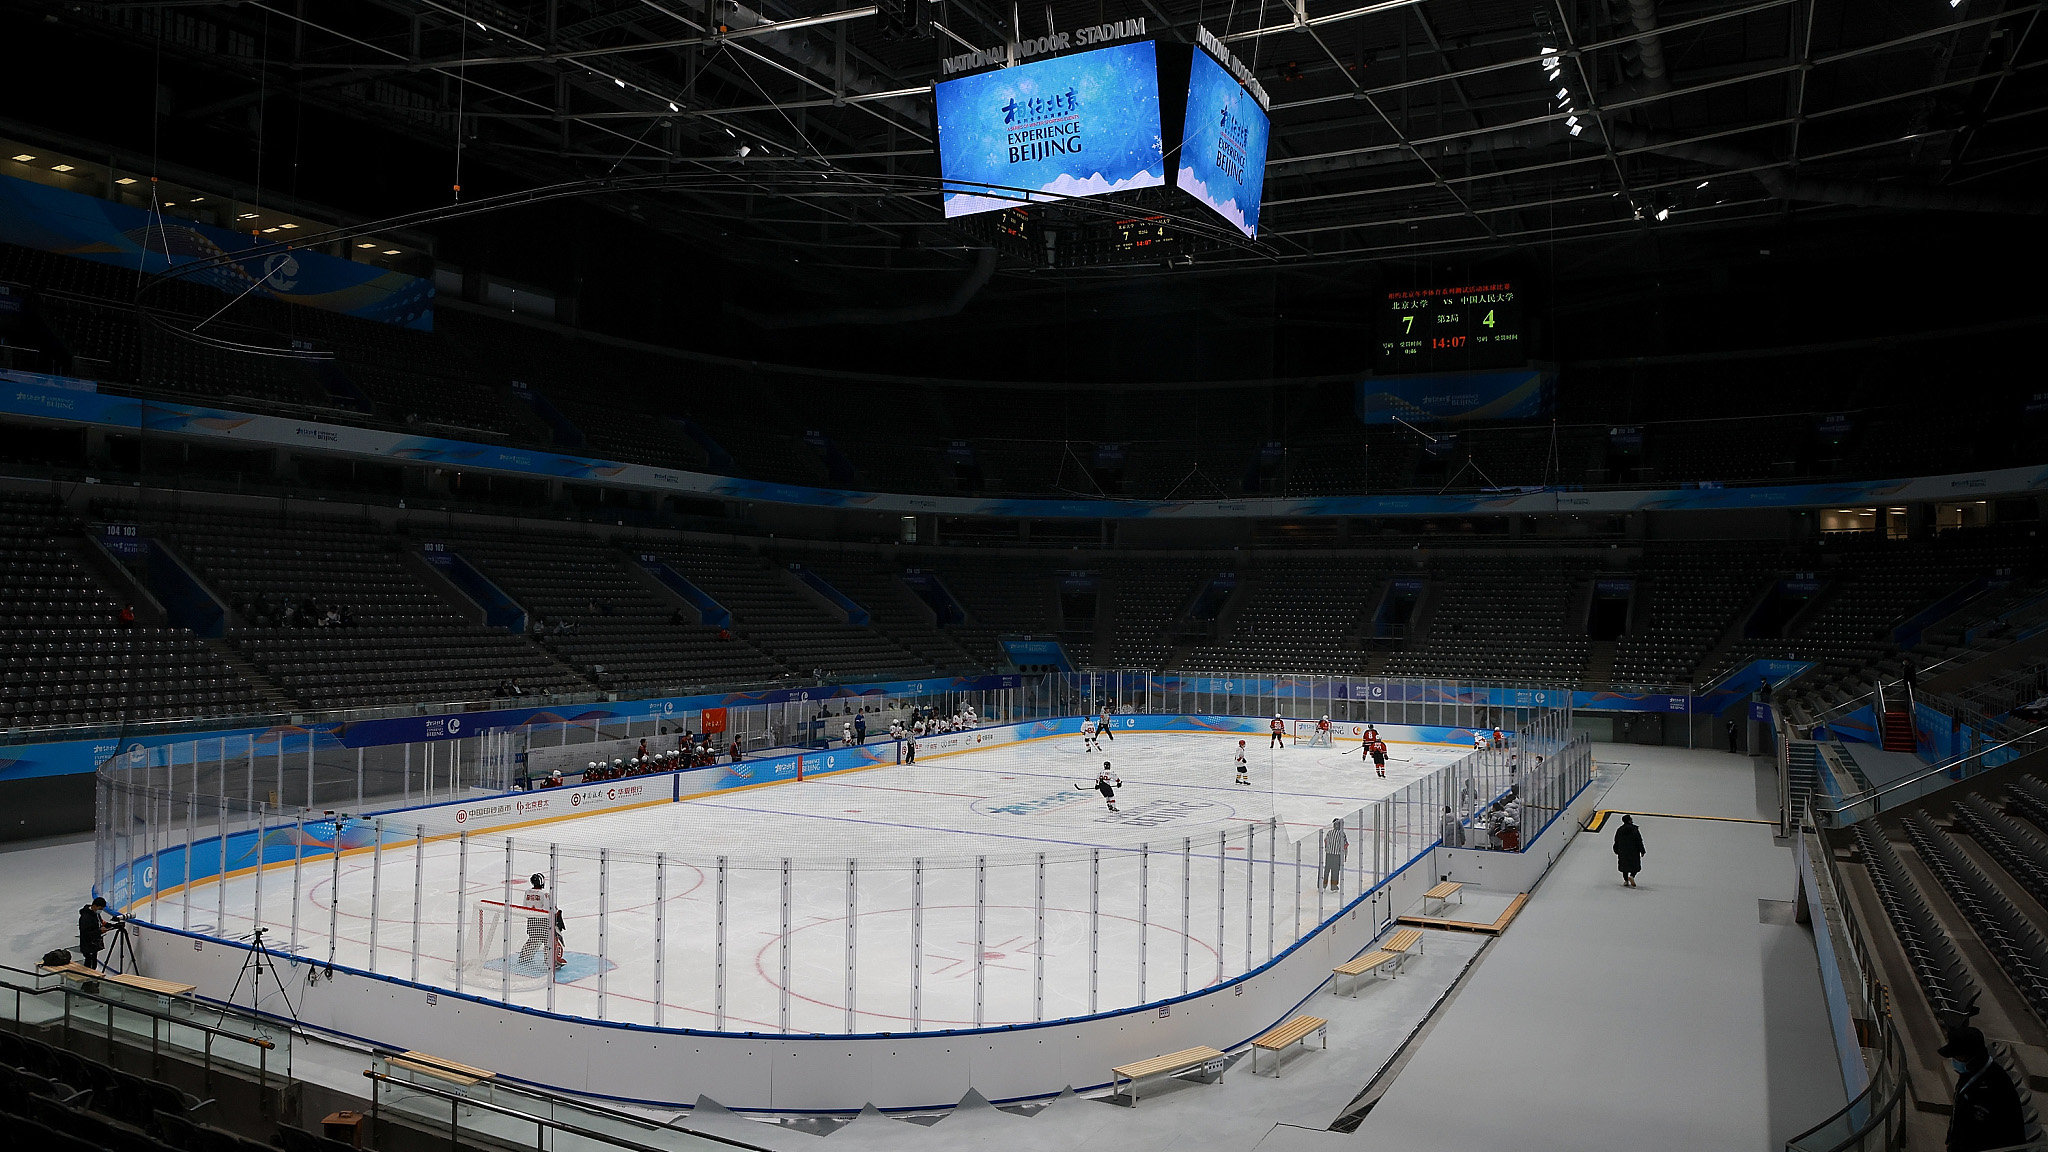 Venue for Beijing Olympics ice hockey features hightech CGTN